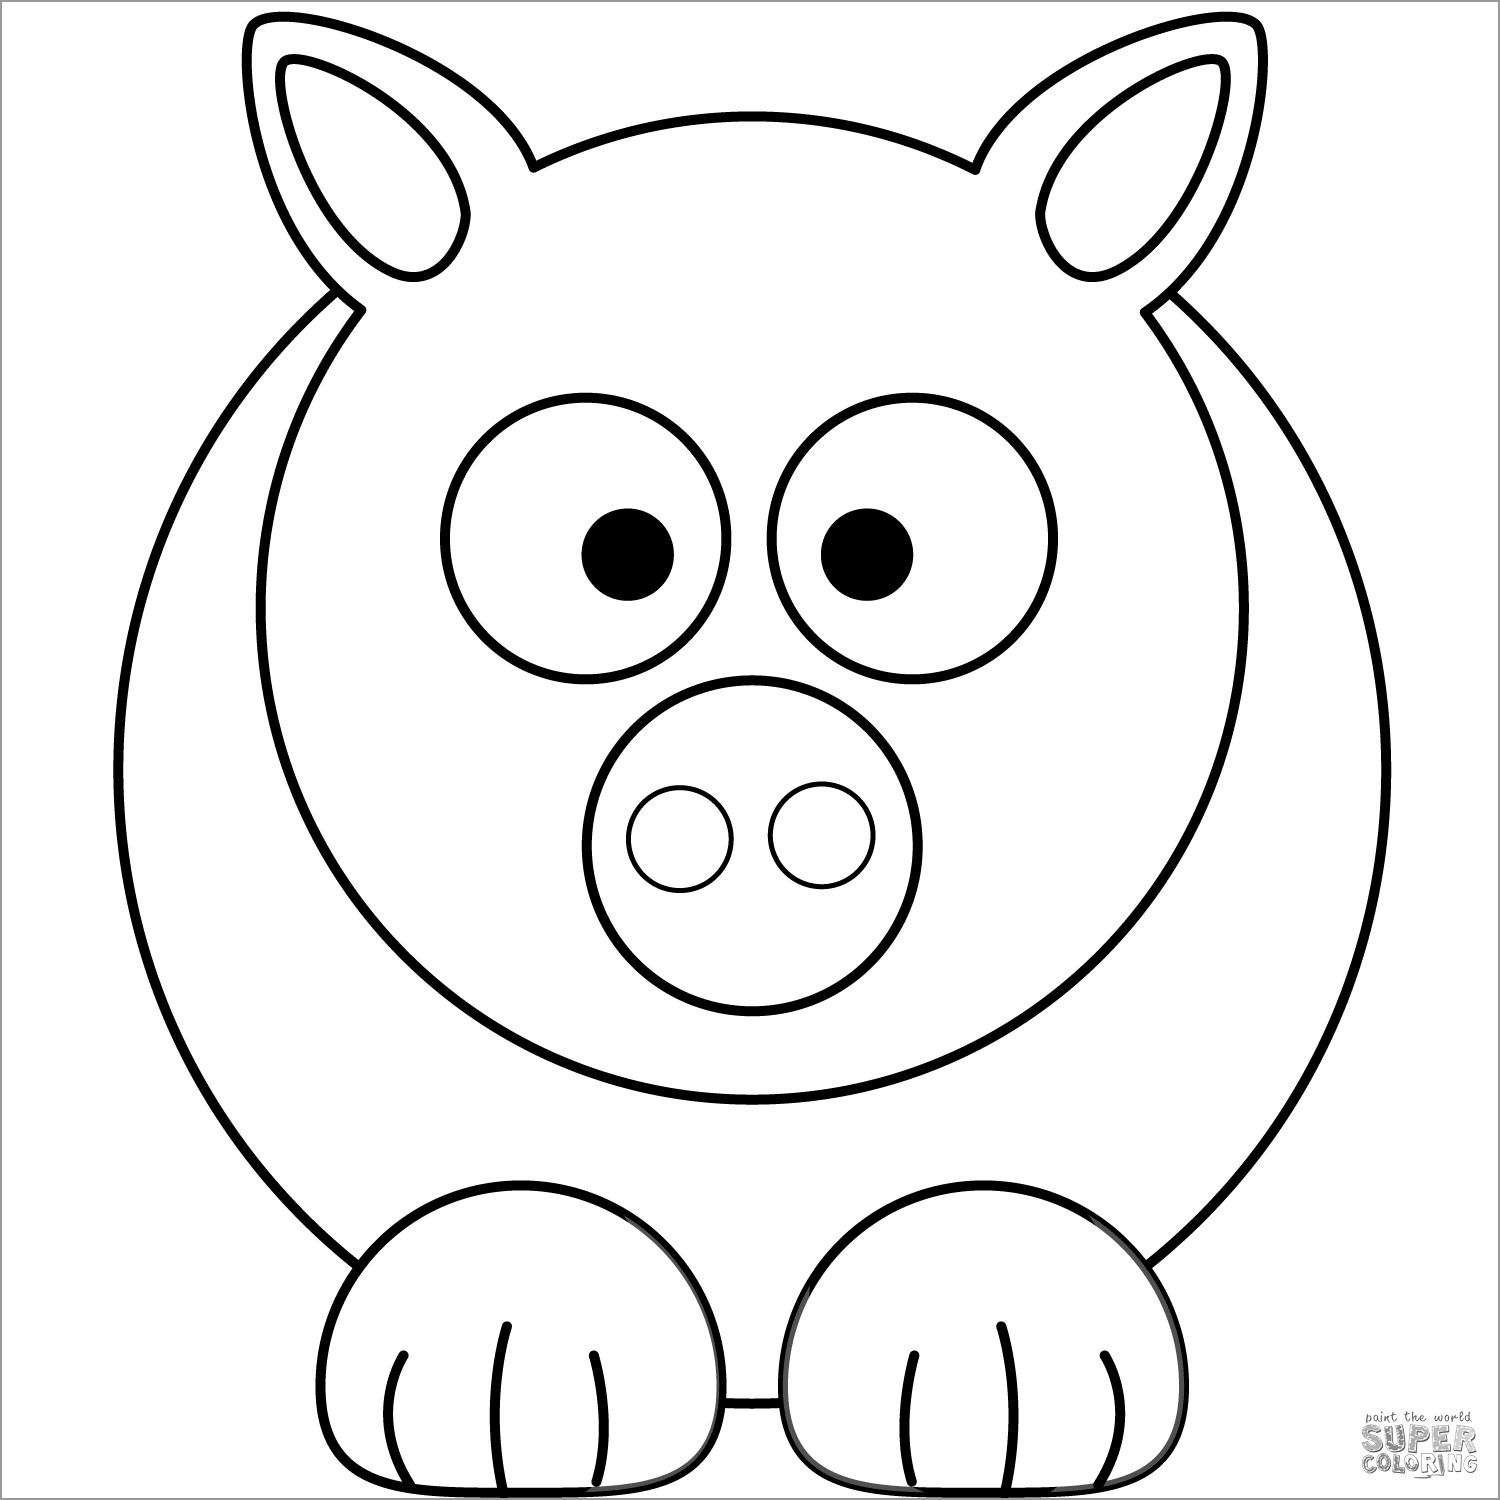 Simple Cartoon Pig Coloring Page